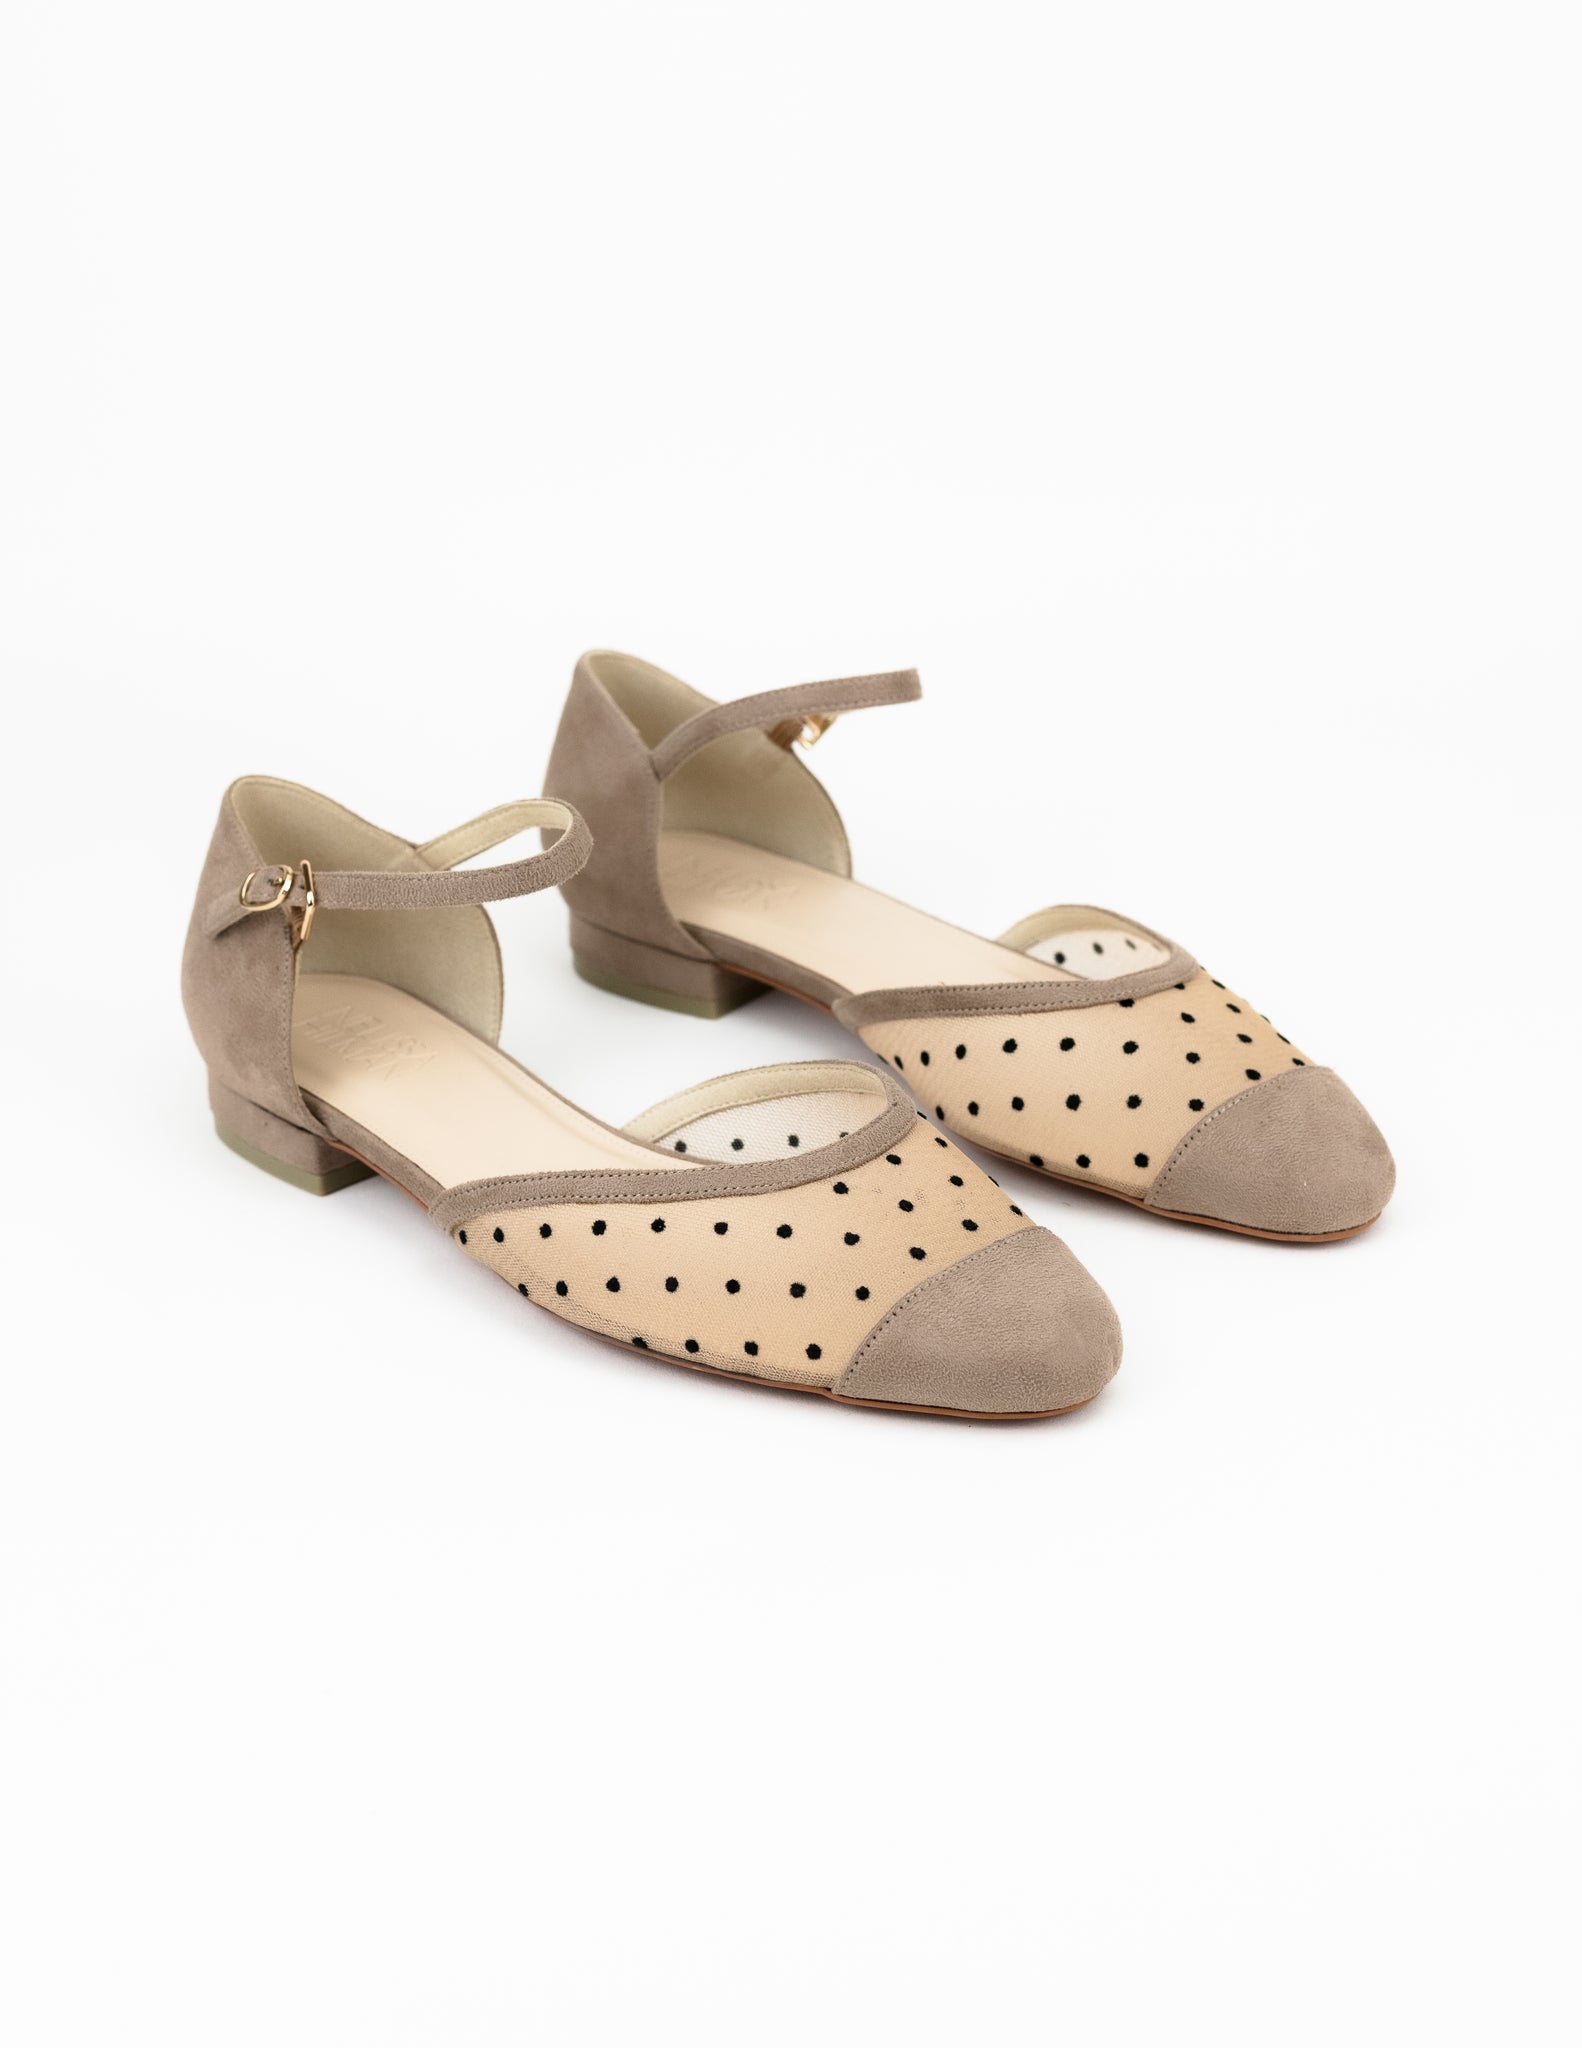 Alysse Ankle Strap D'orsay Flats (Brown)